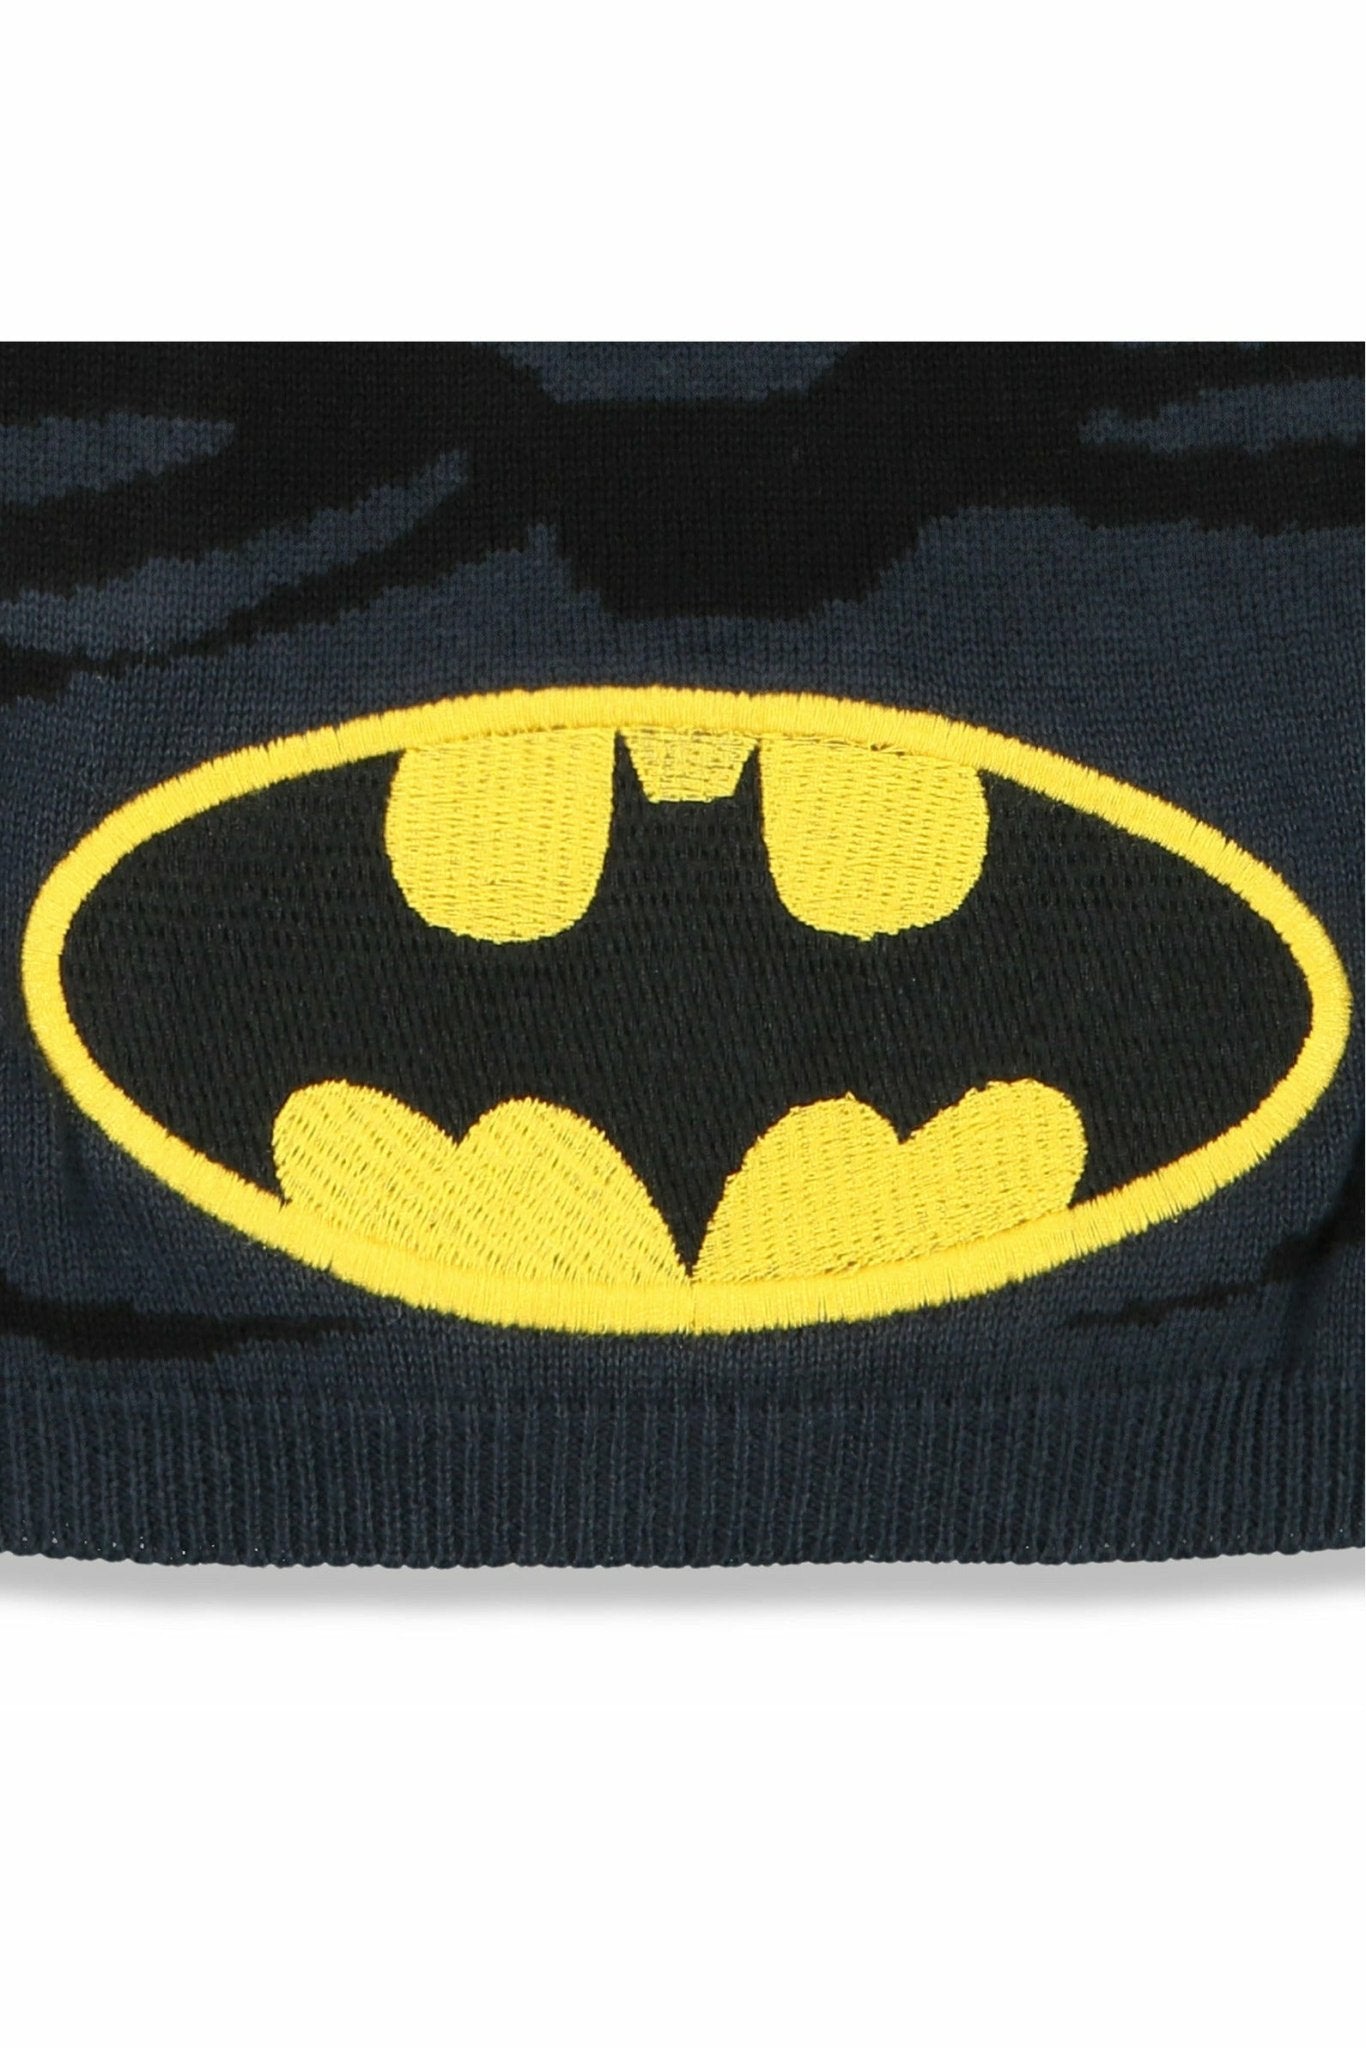 Batman Long Sleeve Sweater - imagikids